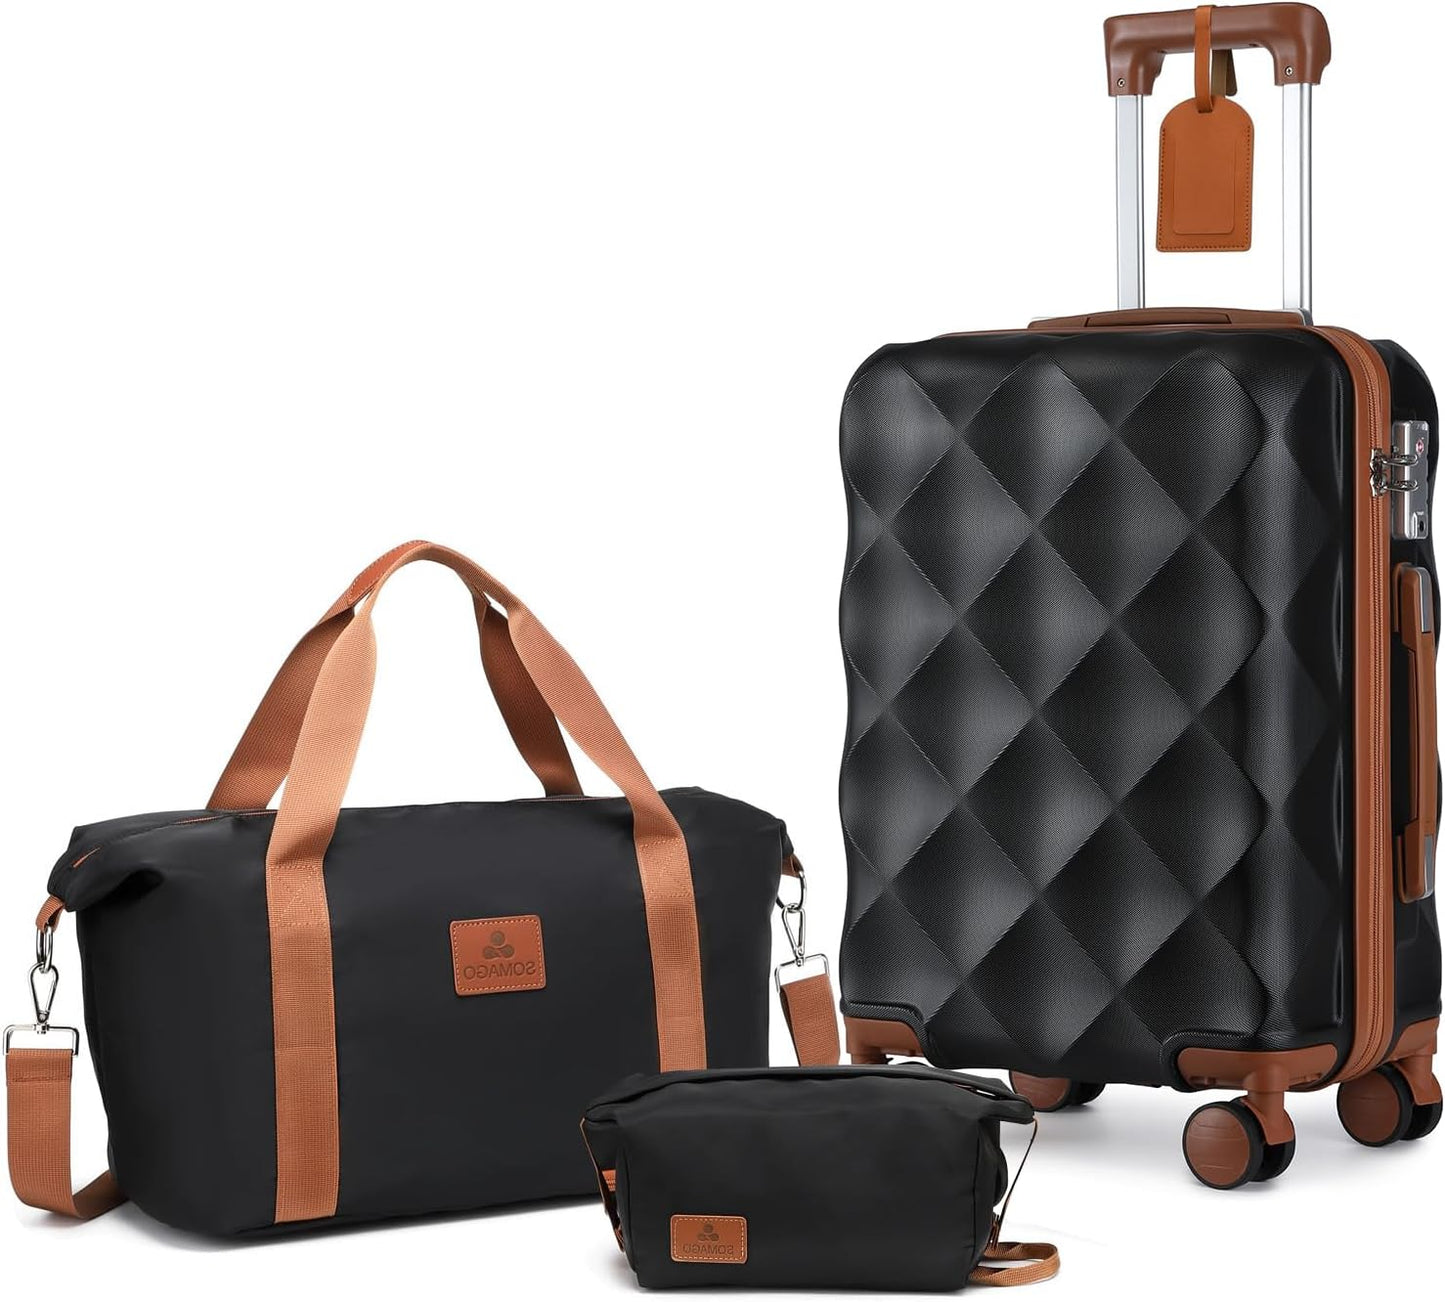 Somago Suitcase Hardside 20 inch Carry On Spinner Luggage with TSA Lock (Black)